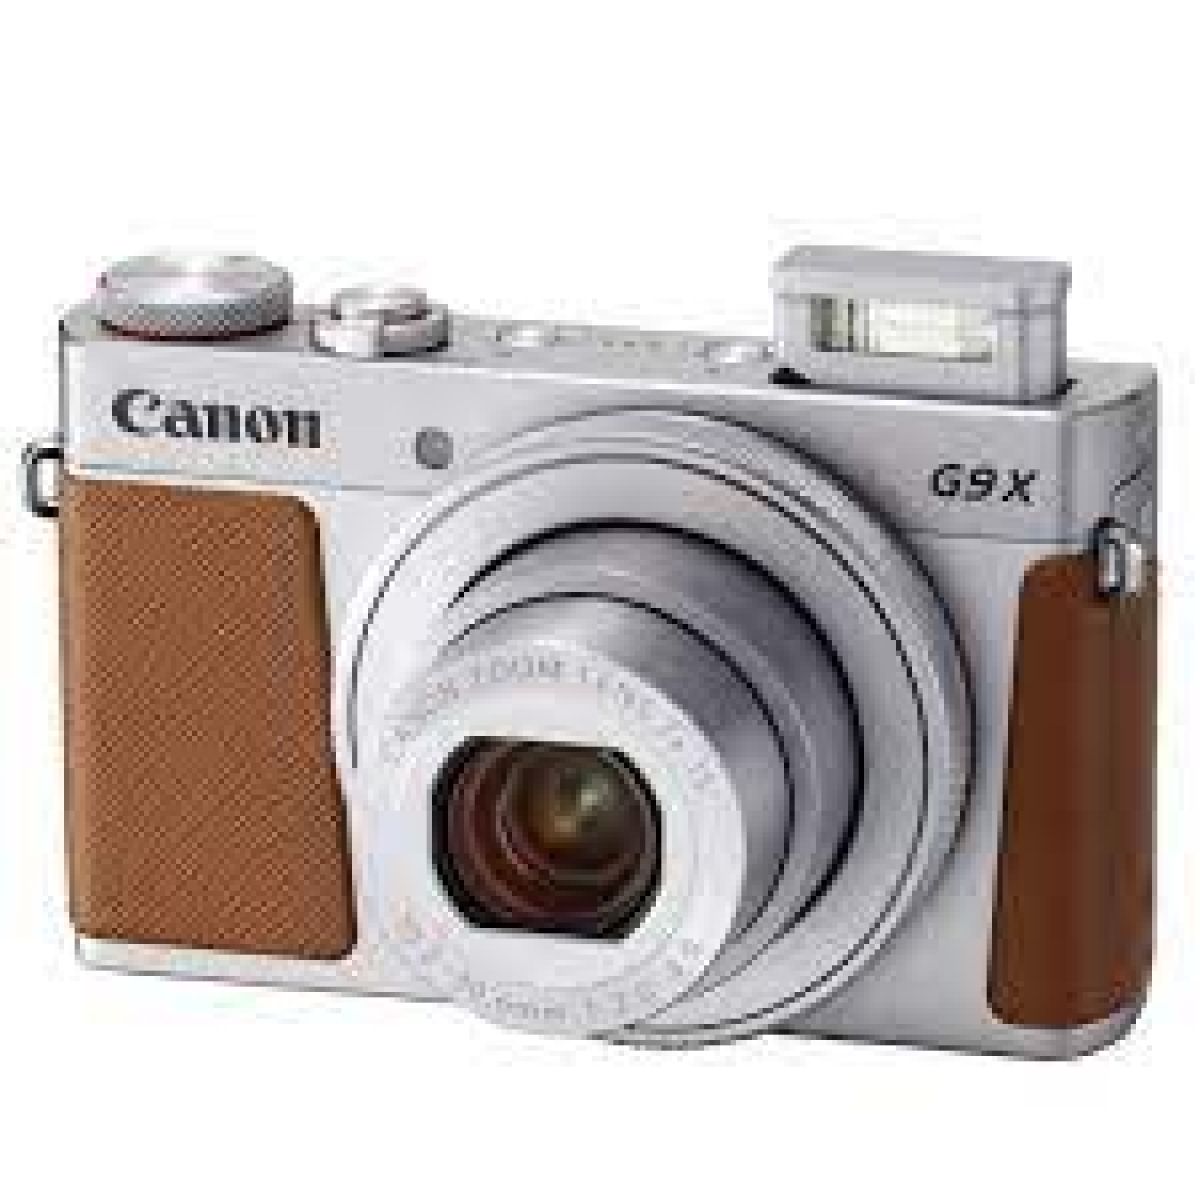 Canon PowerShot G9 X mark II 20 mpx  SD